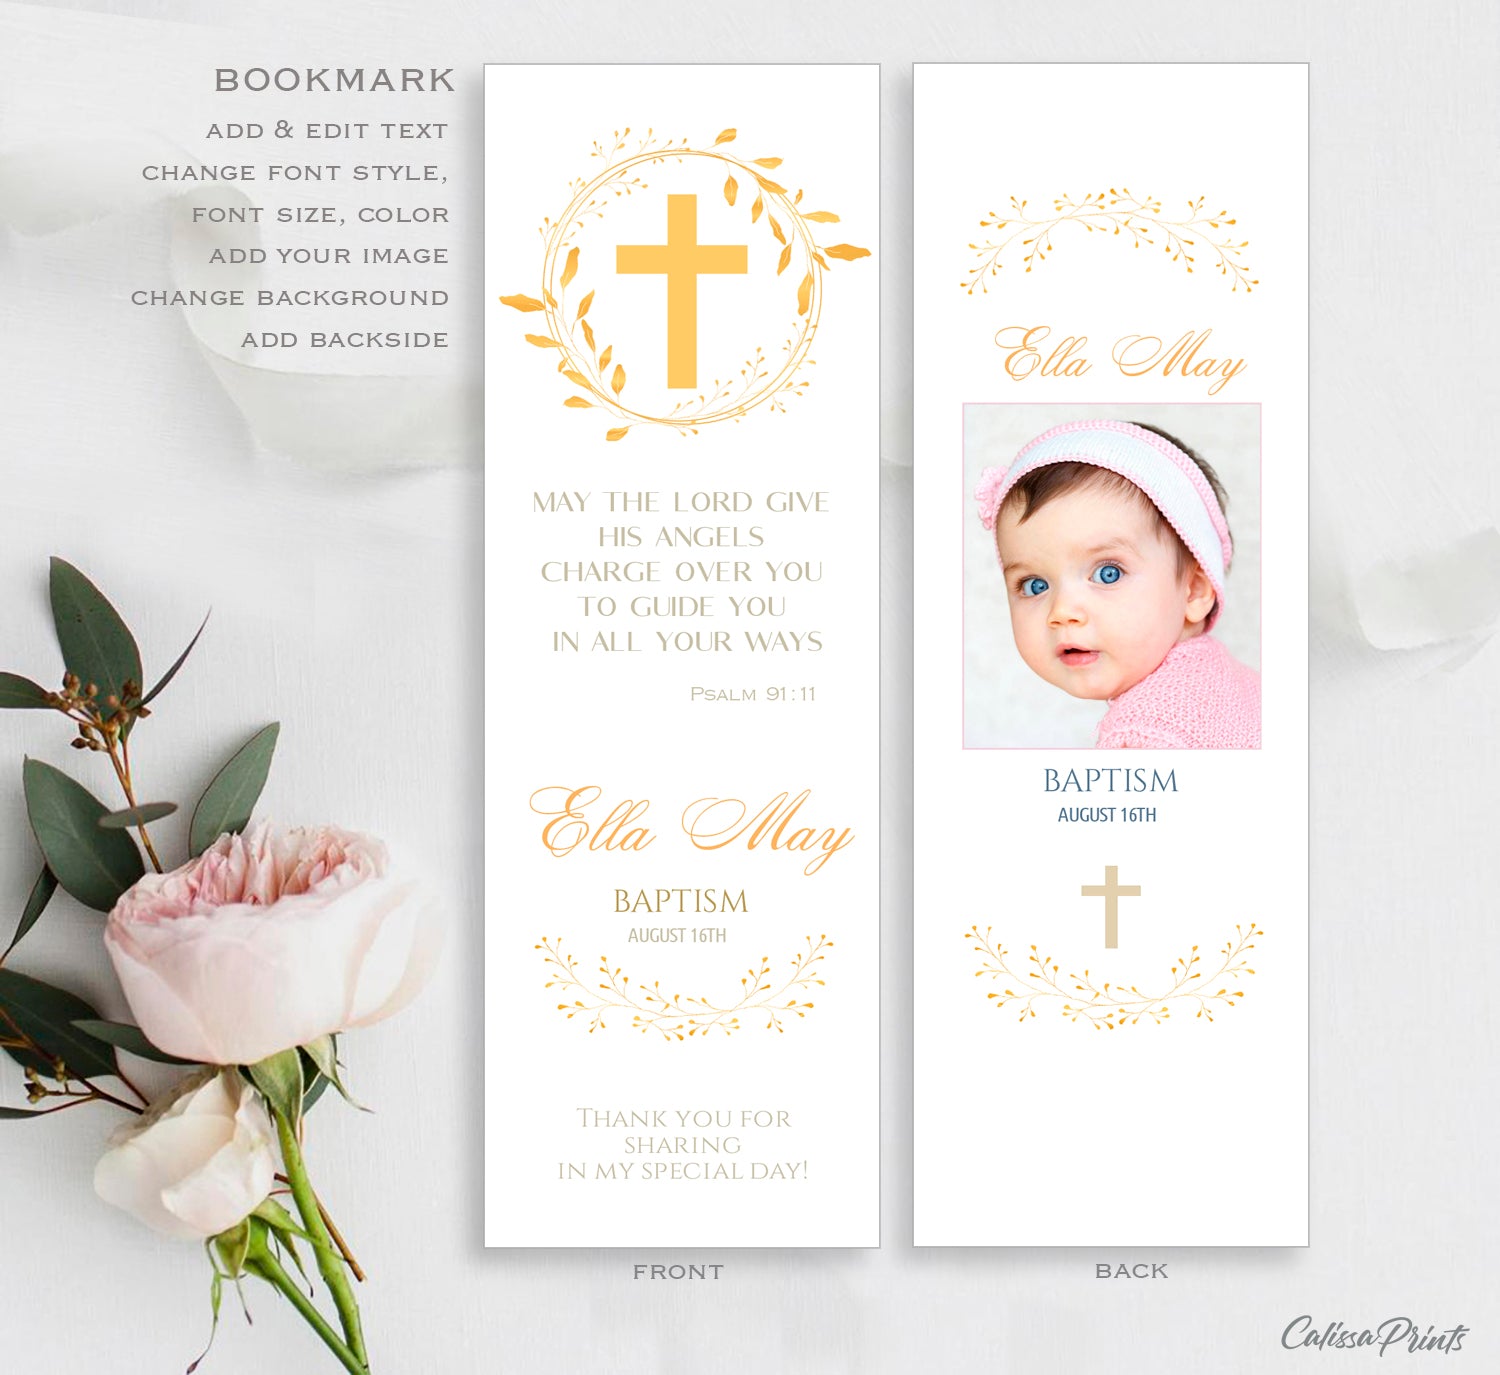 Baptism Favors Bookmark Keepsake Template - Golden Lea Design, BAPT2 - CalissaPrints